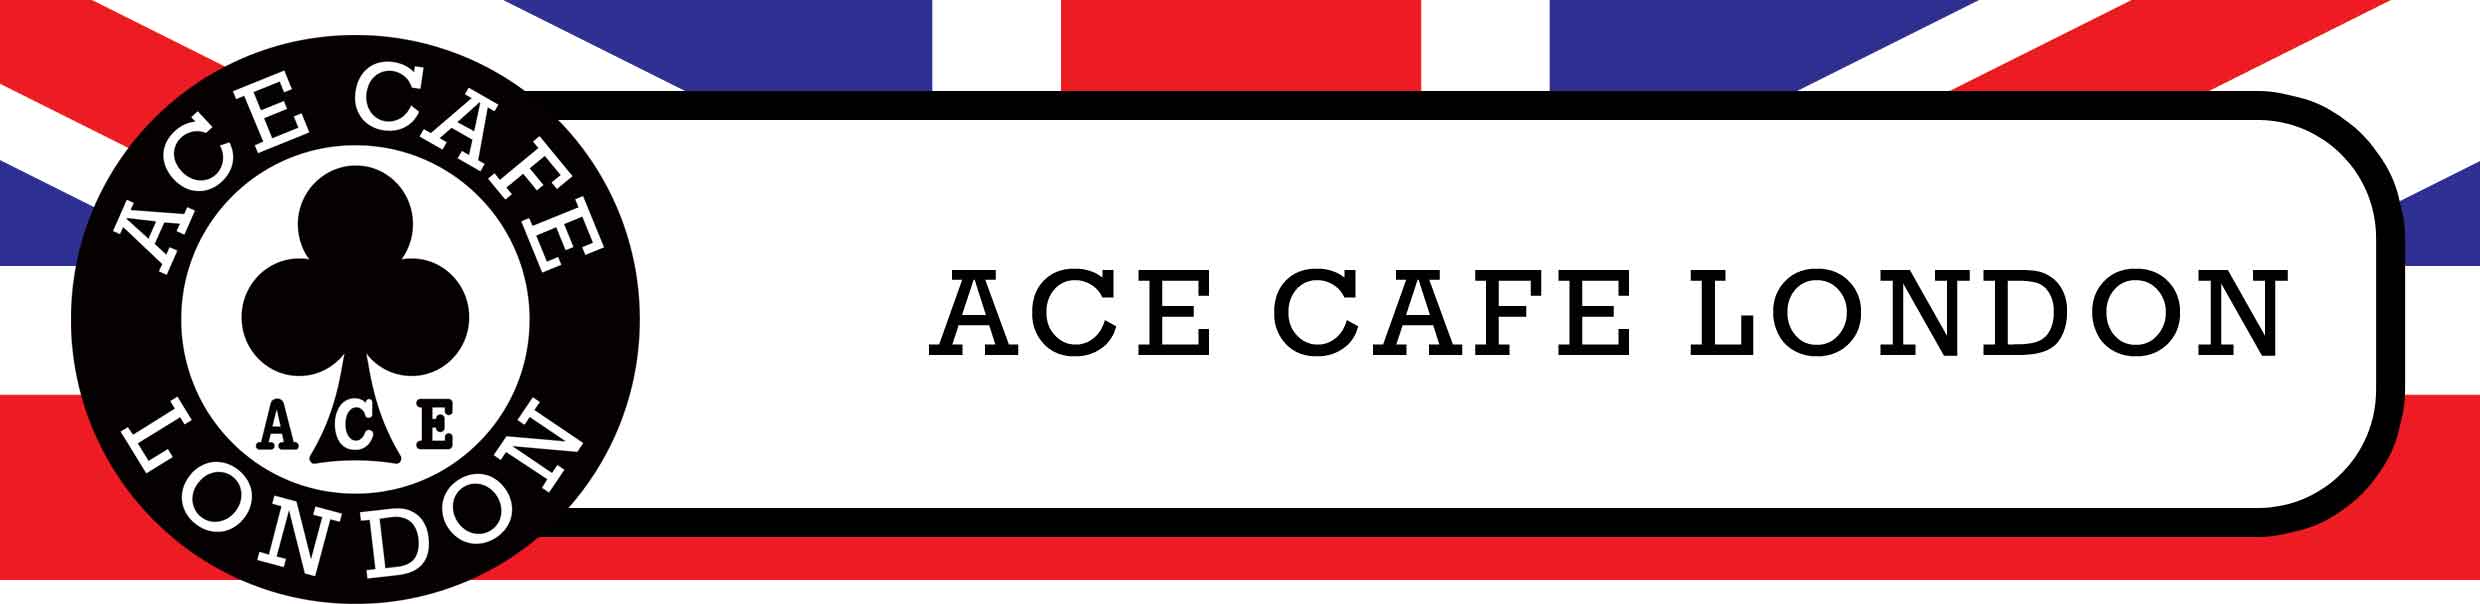 Ace Cafe London Logo photo - 1